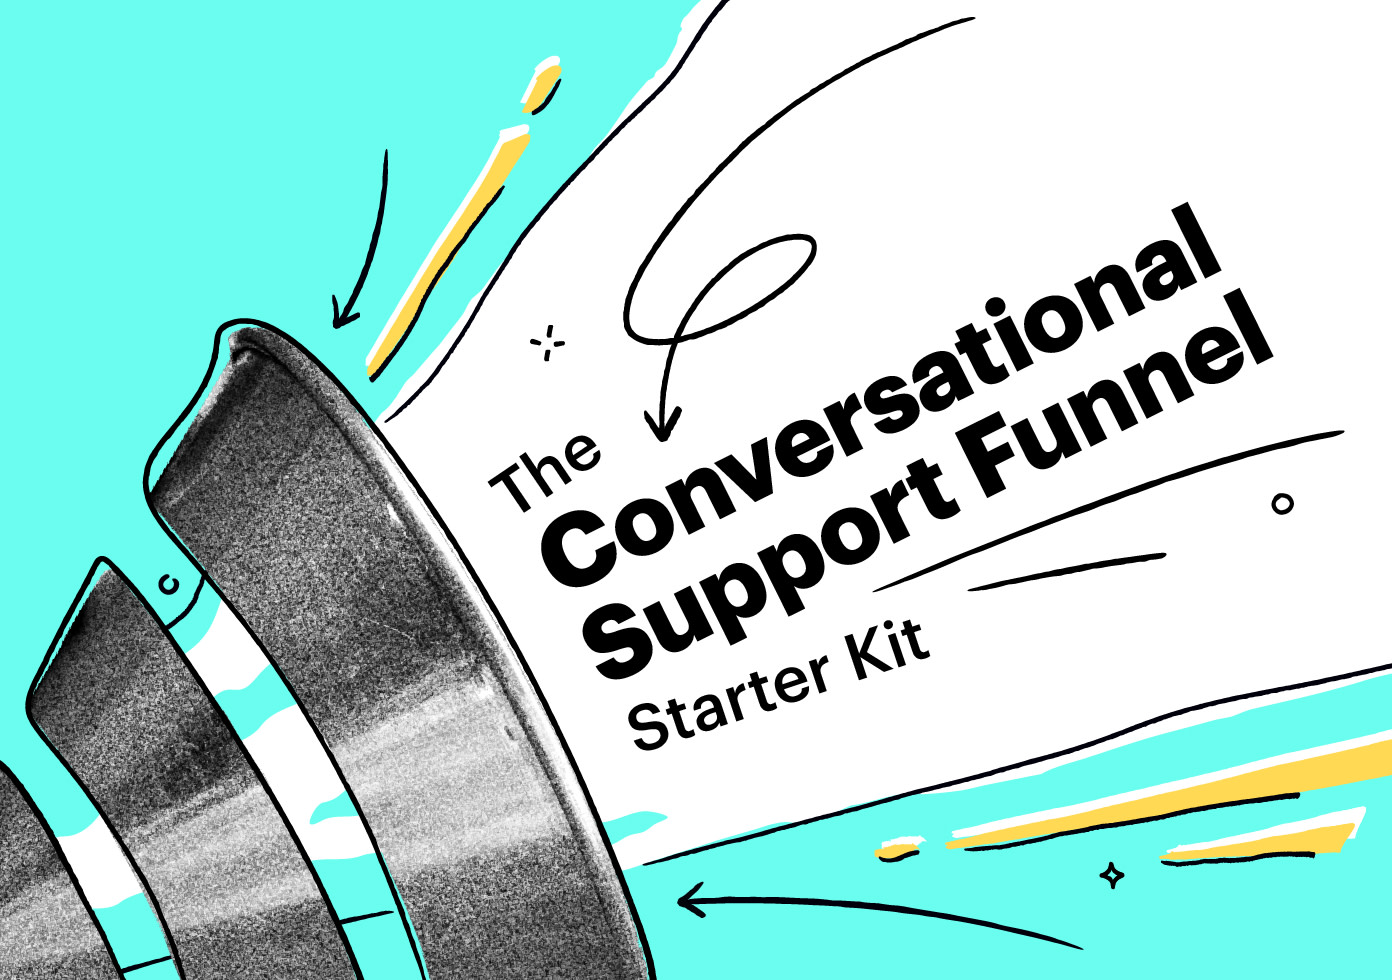 The Conversational Support Starter Kit